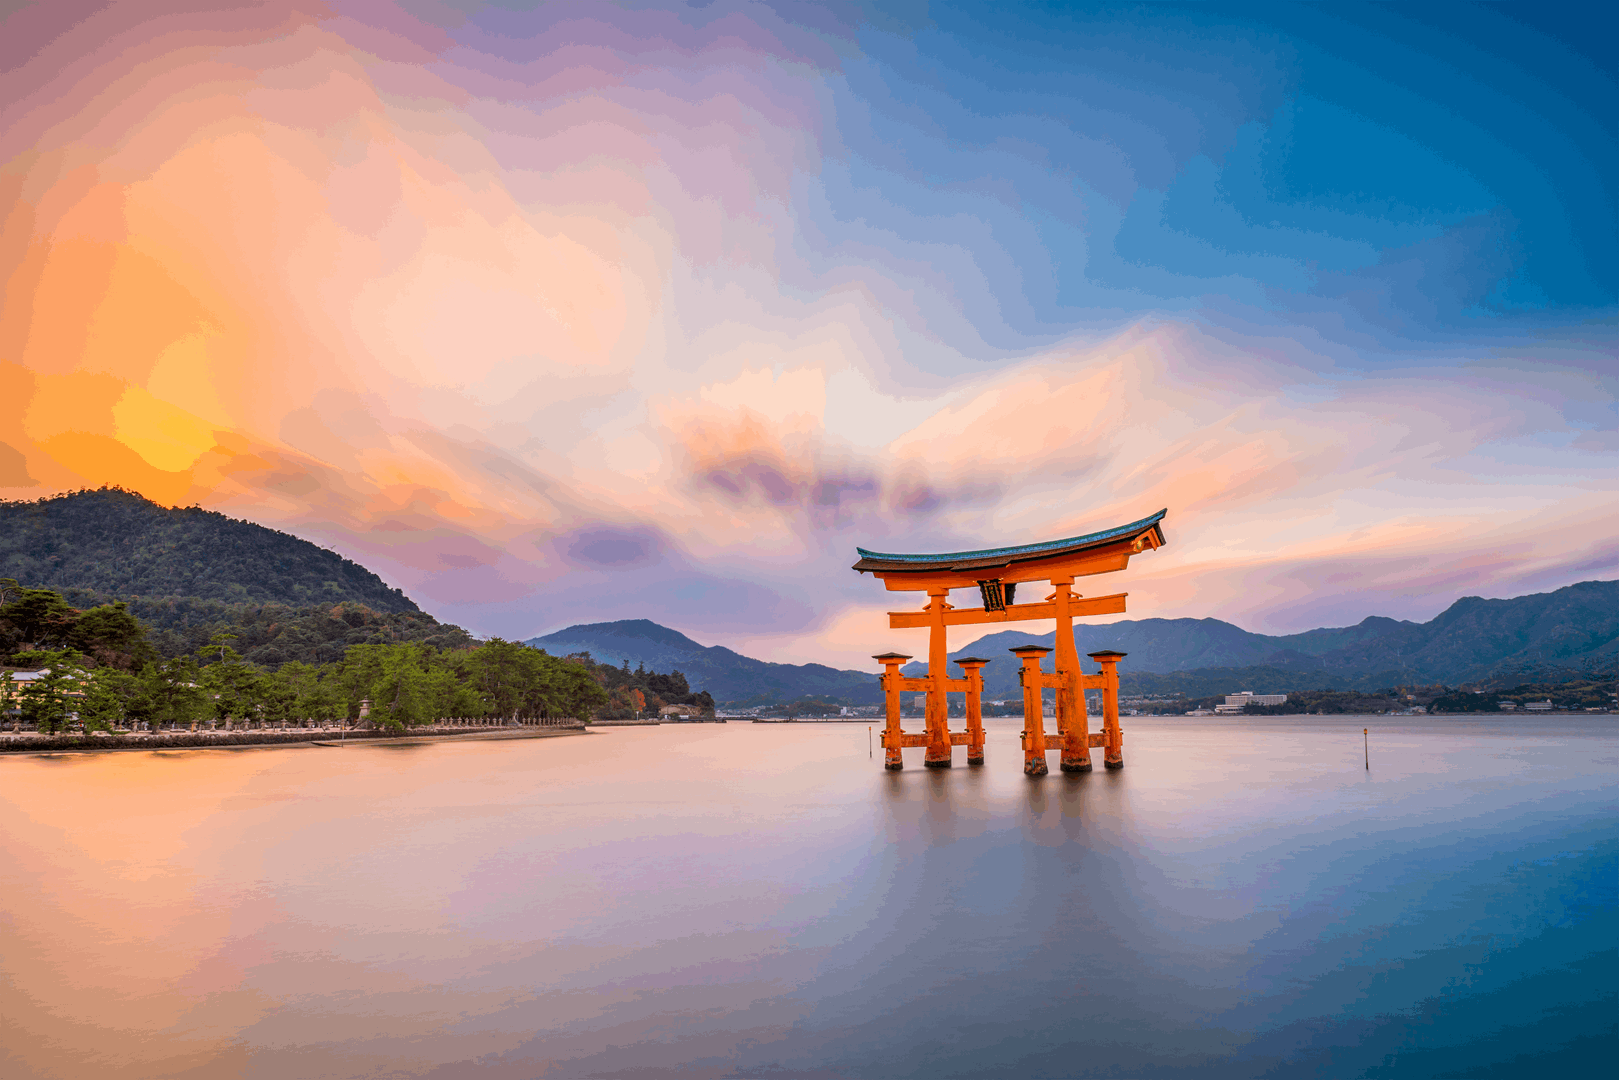 Miyajima/Itsukushima Island – Floating Torii Gate